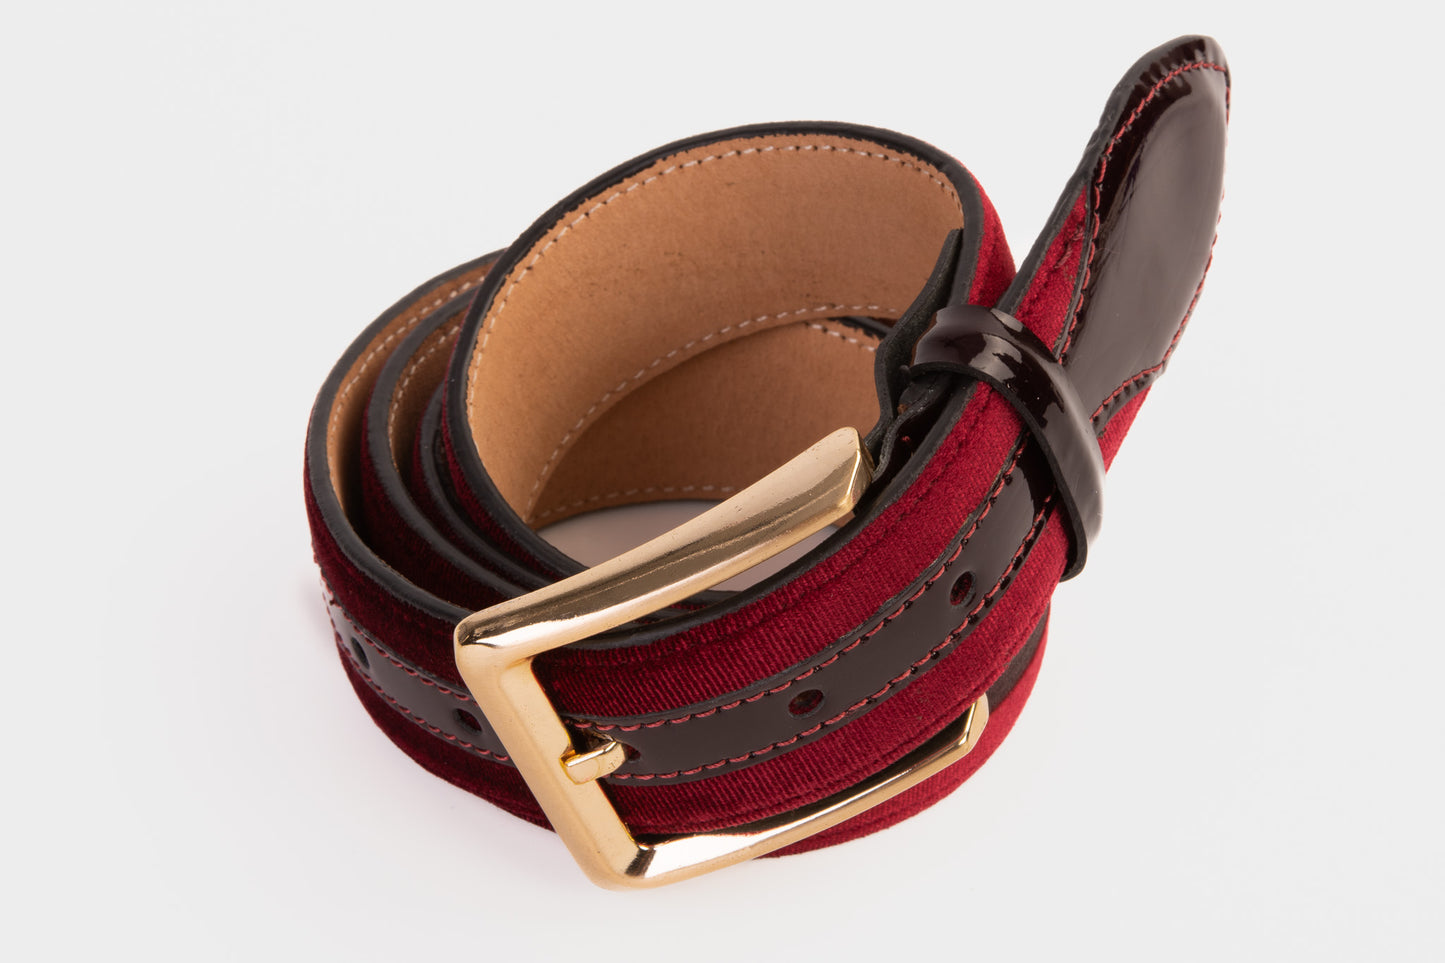 The Pontalto Burgundy Leather Belt